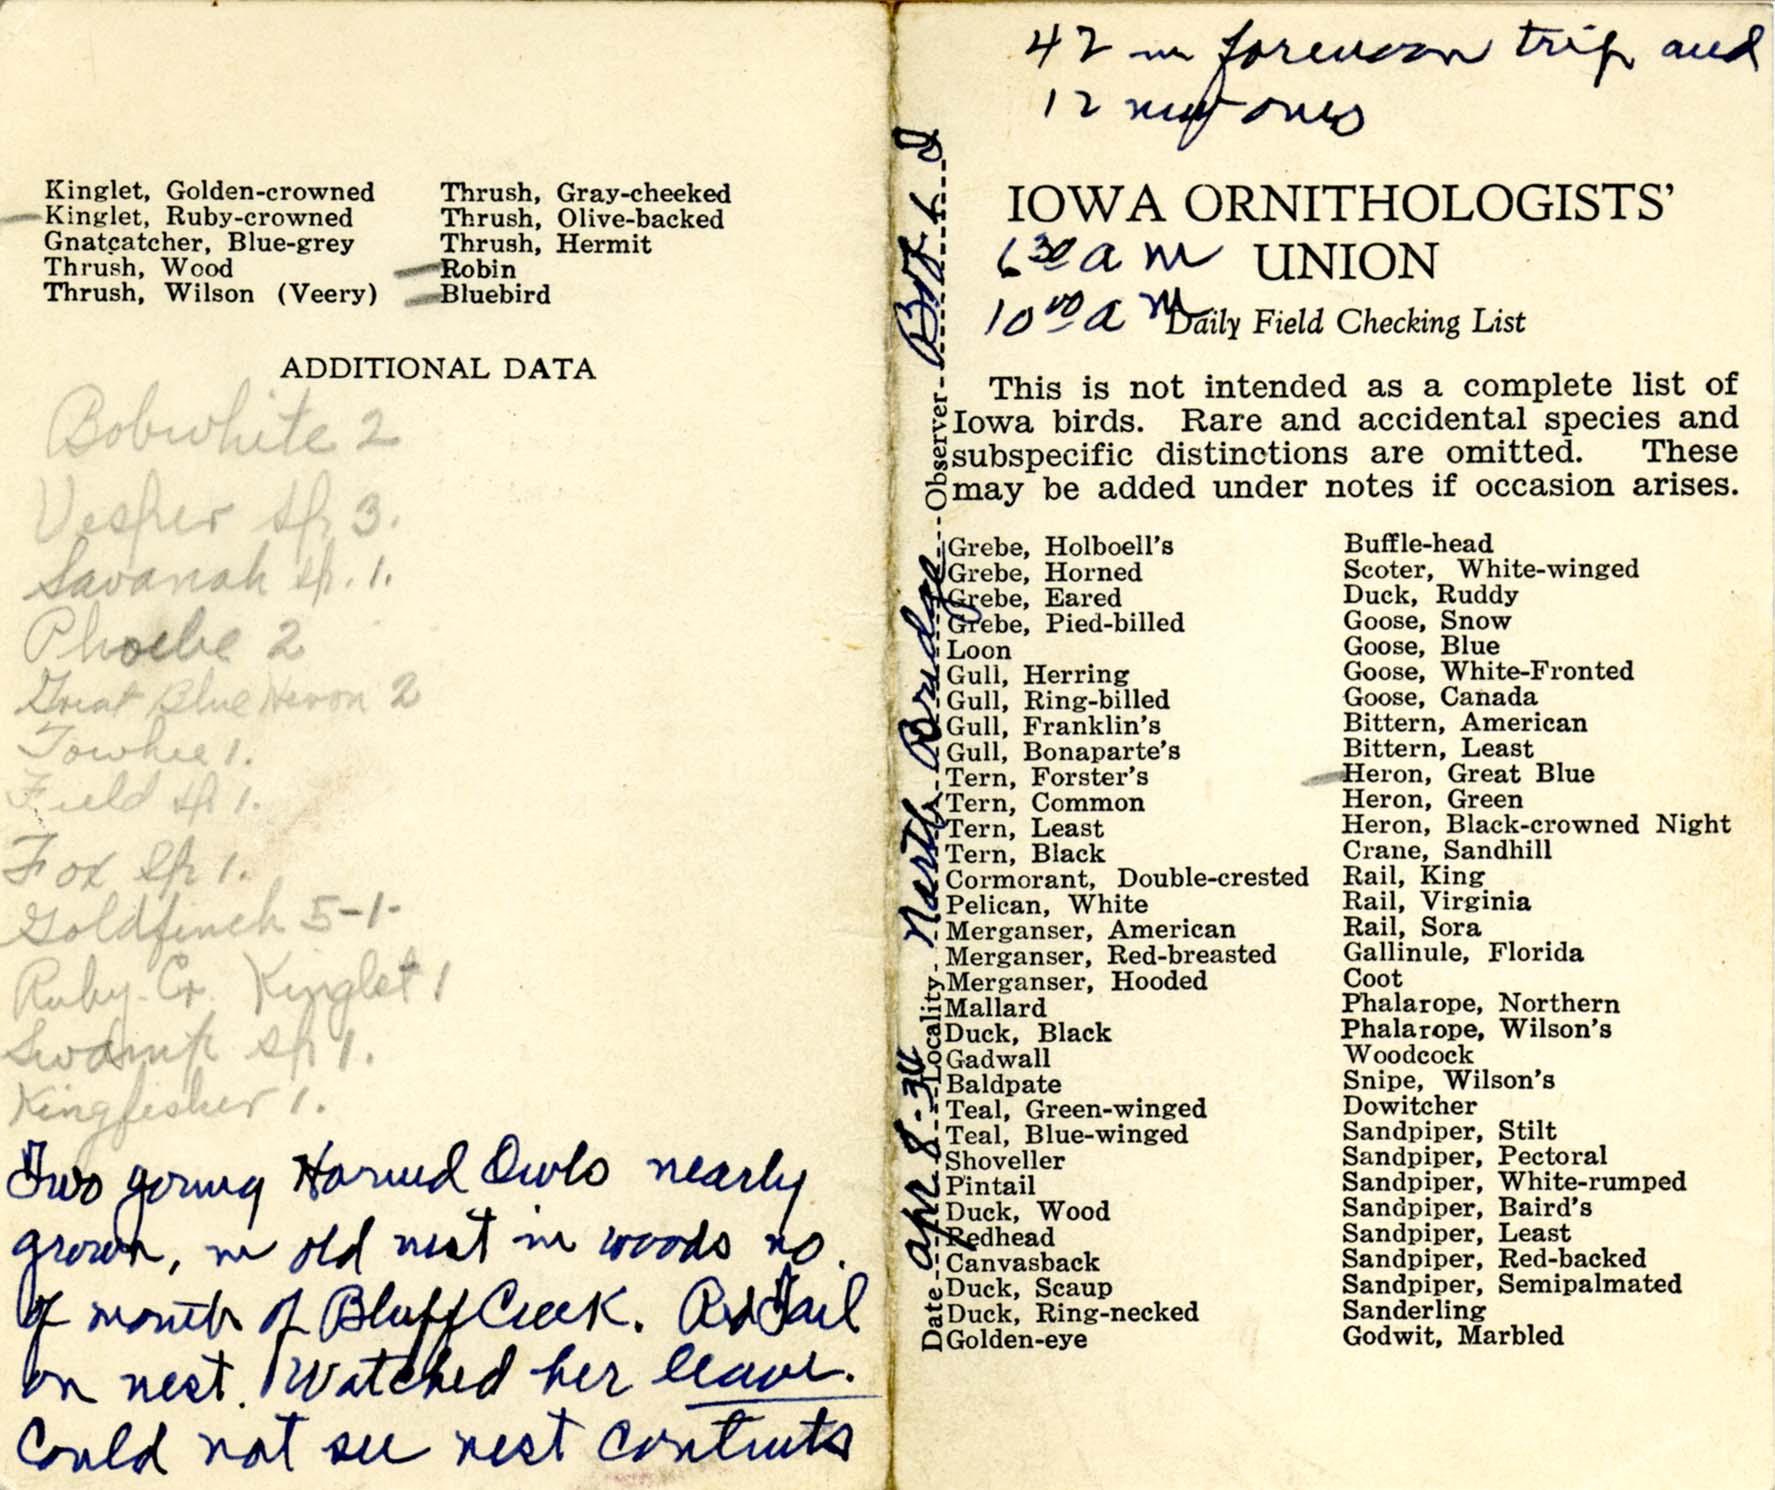 Daily field checking list, Walter Rosene, April 8, 1934